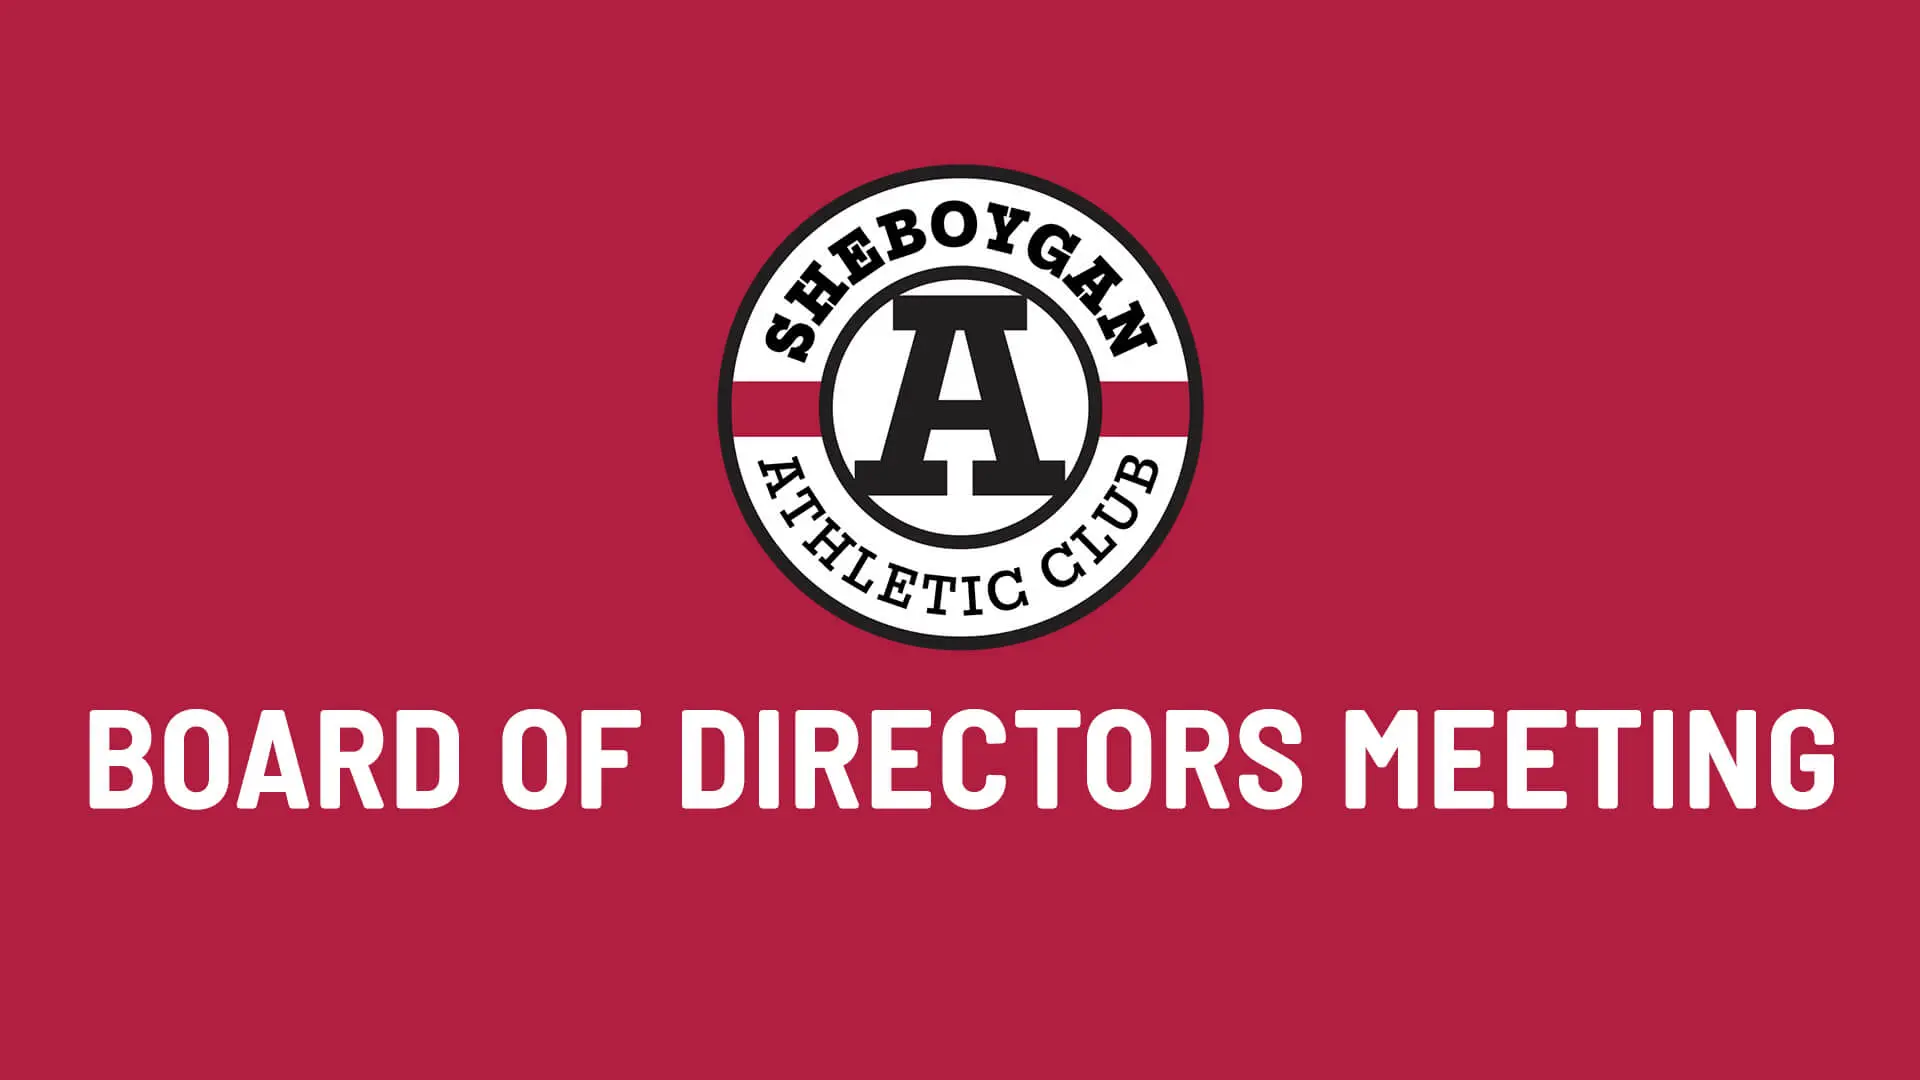 Sheboygan Athletic Club Board of Directors Meeting